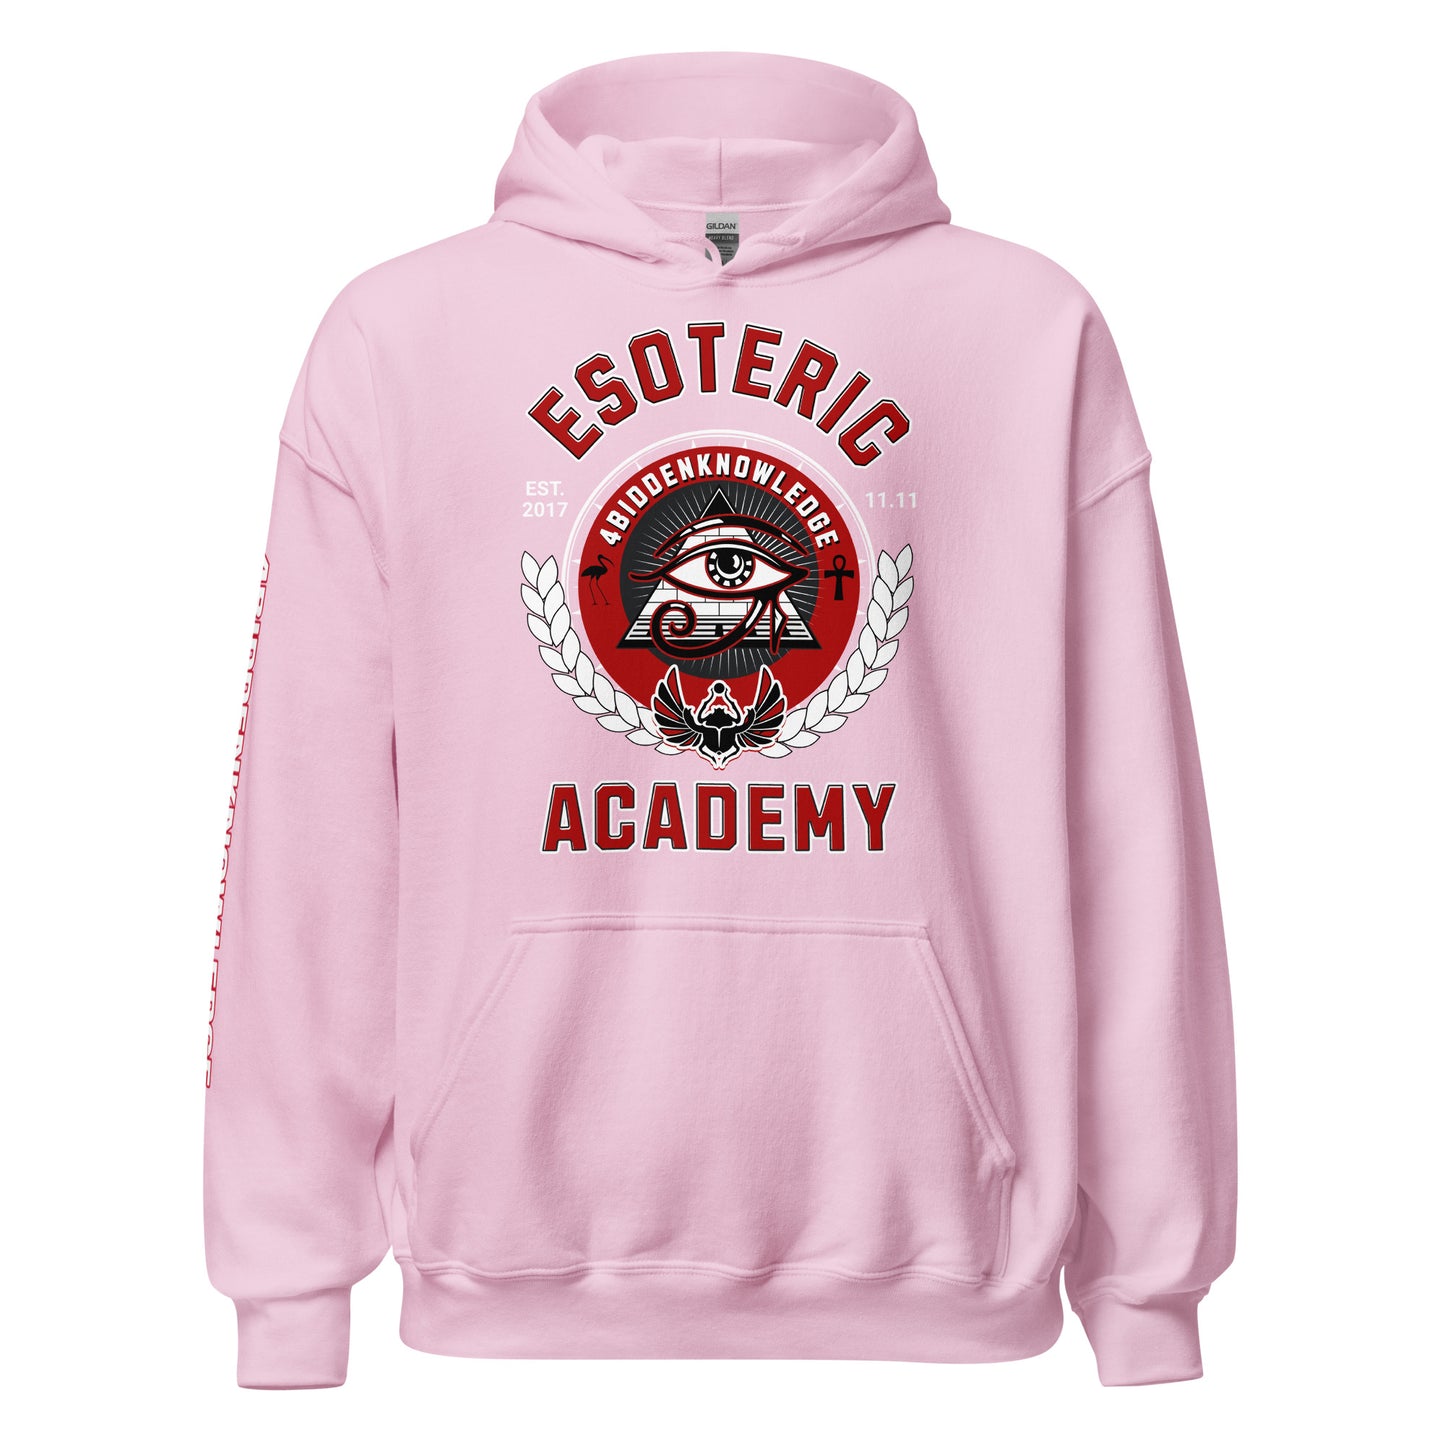 Academy Unisex Hoodie